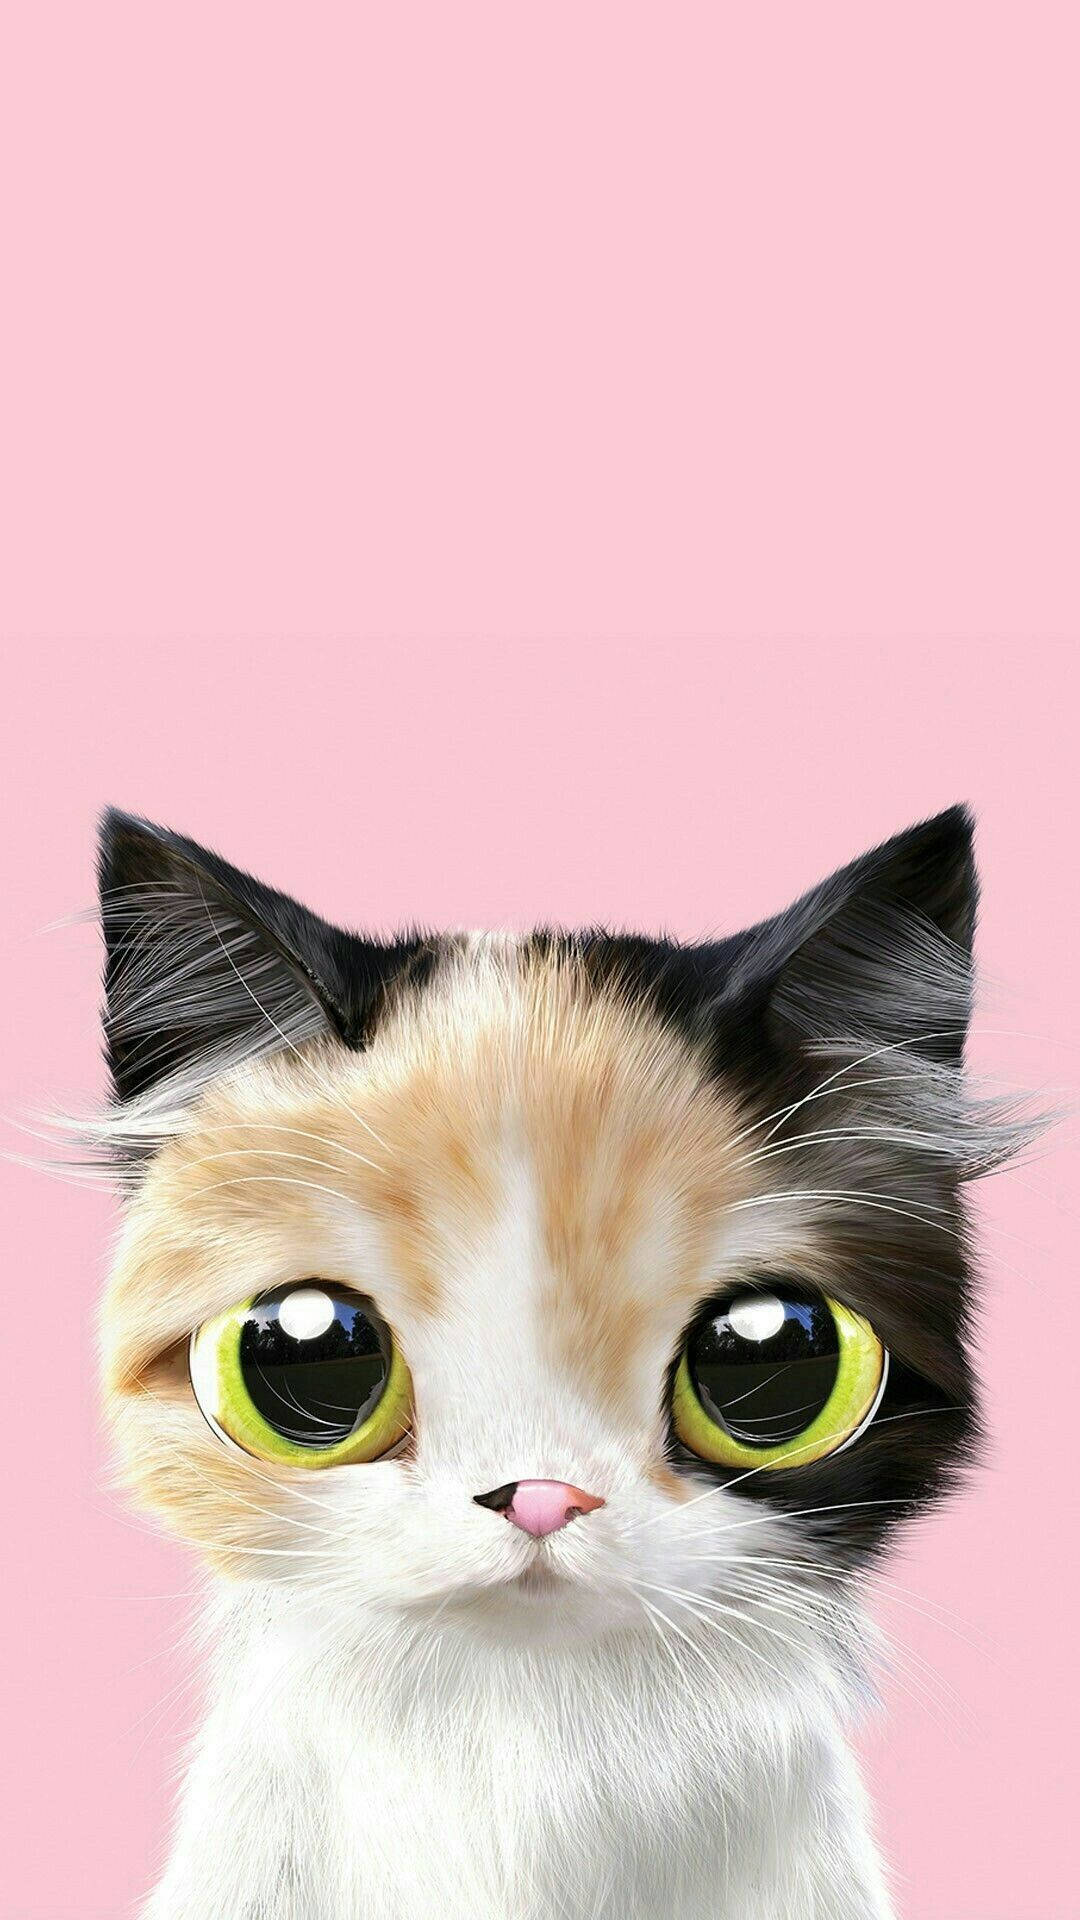 100+] Cat Iphone Wallpapers | Wallpapers.com